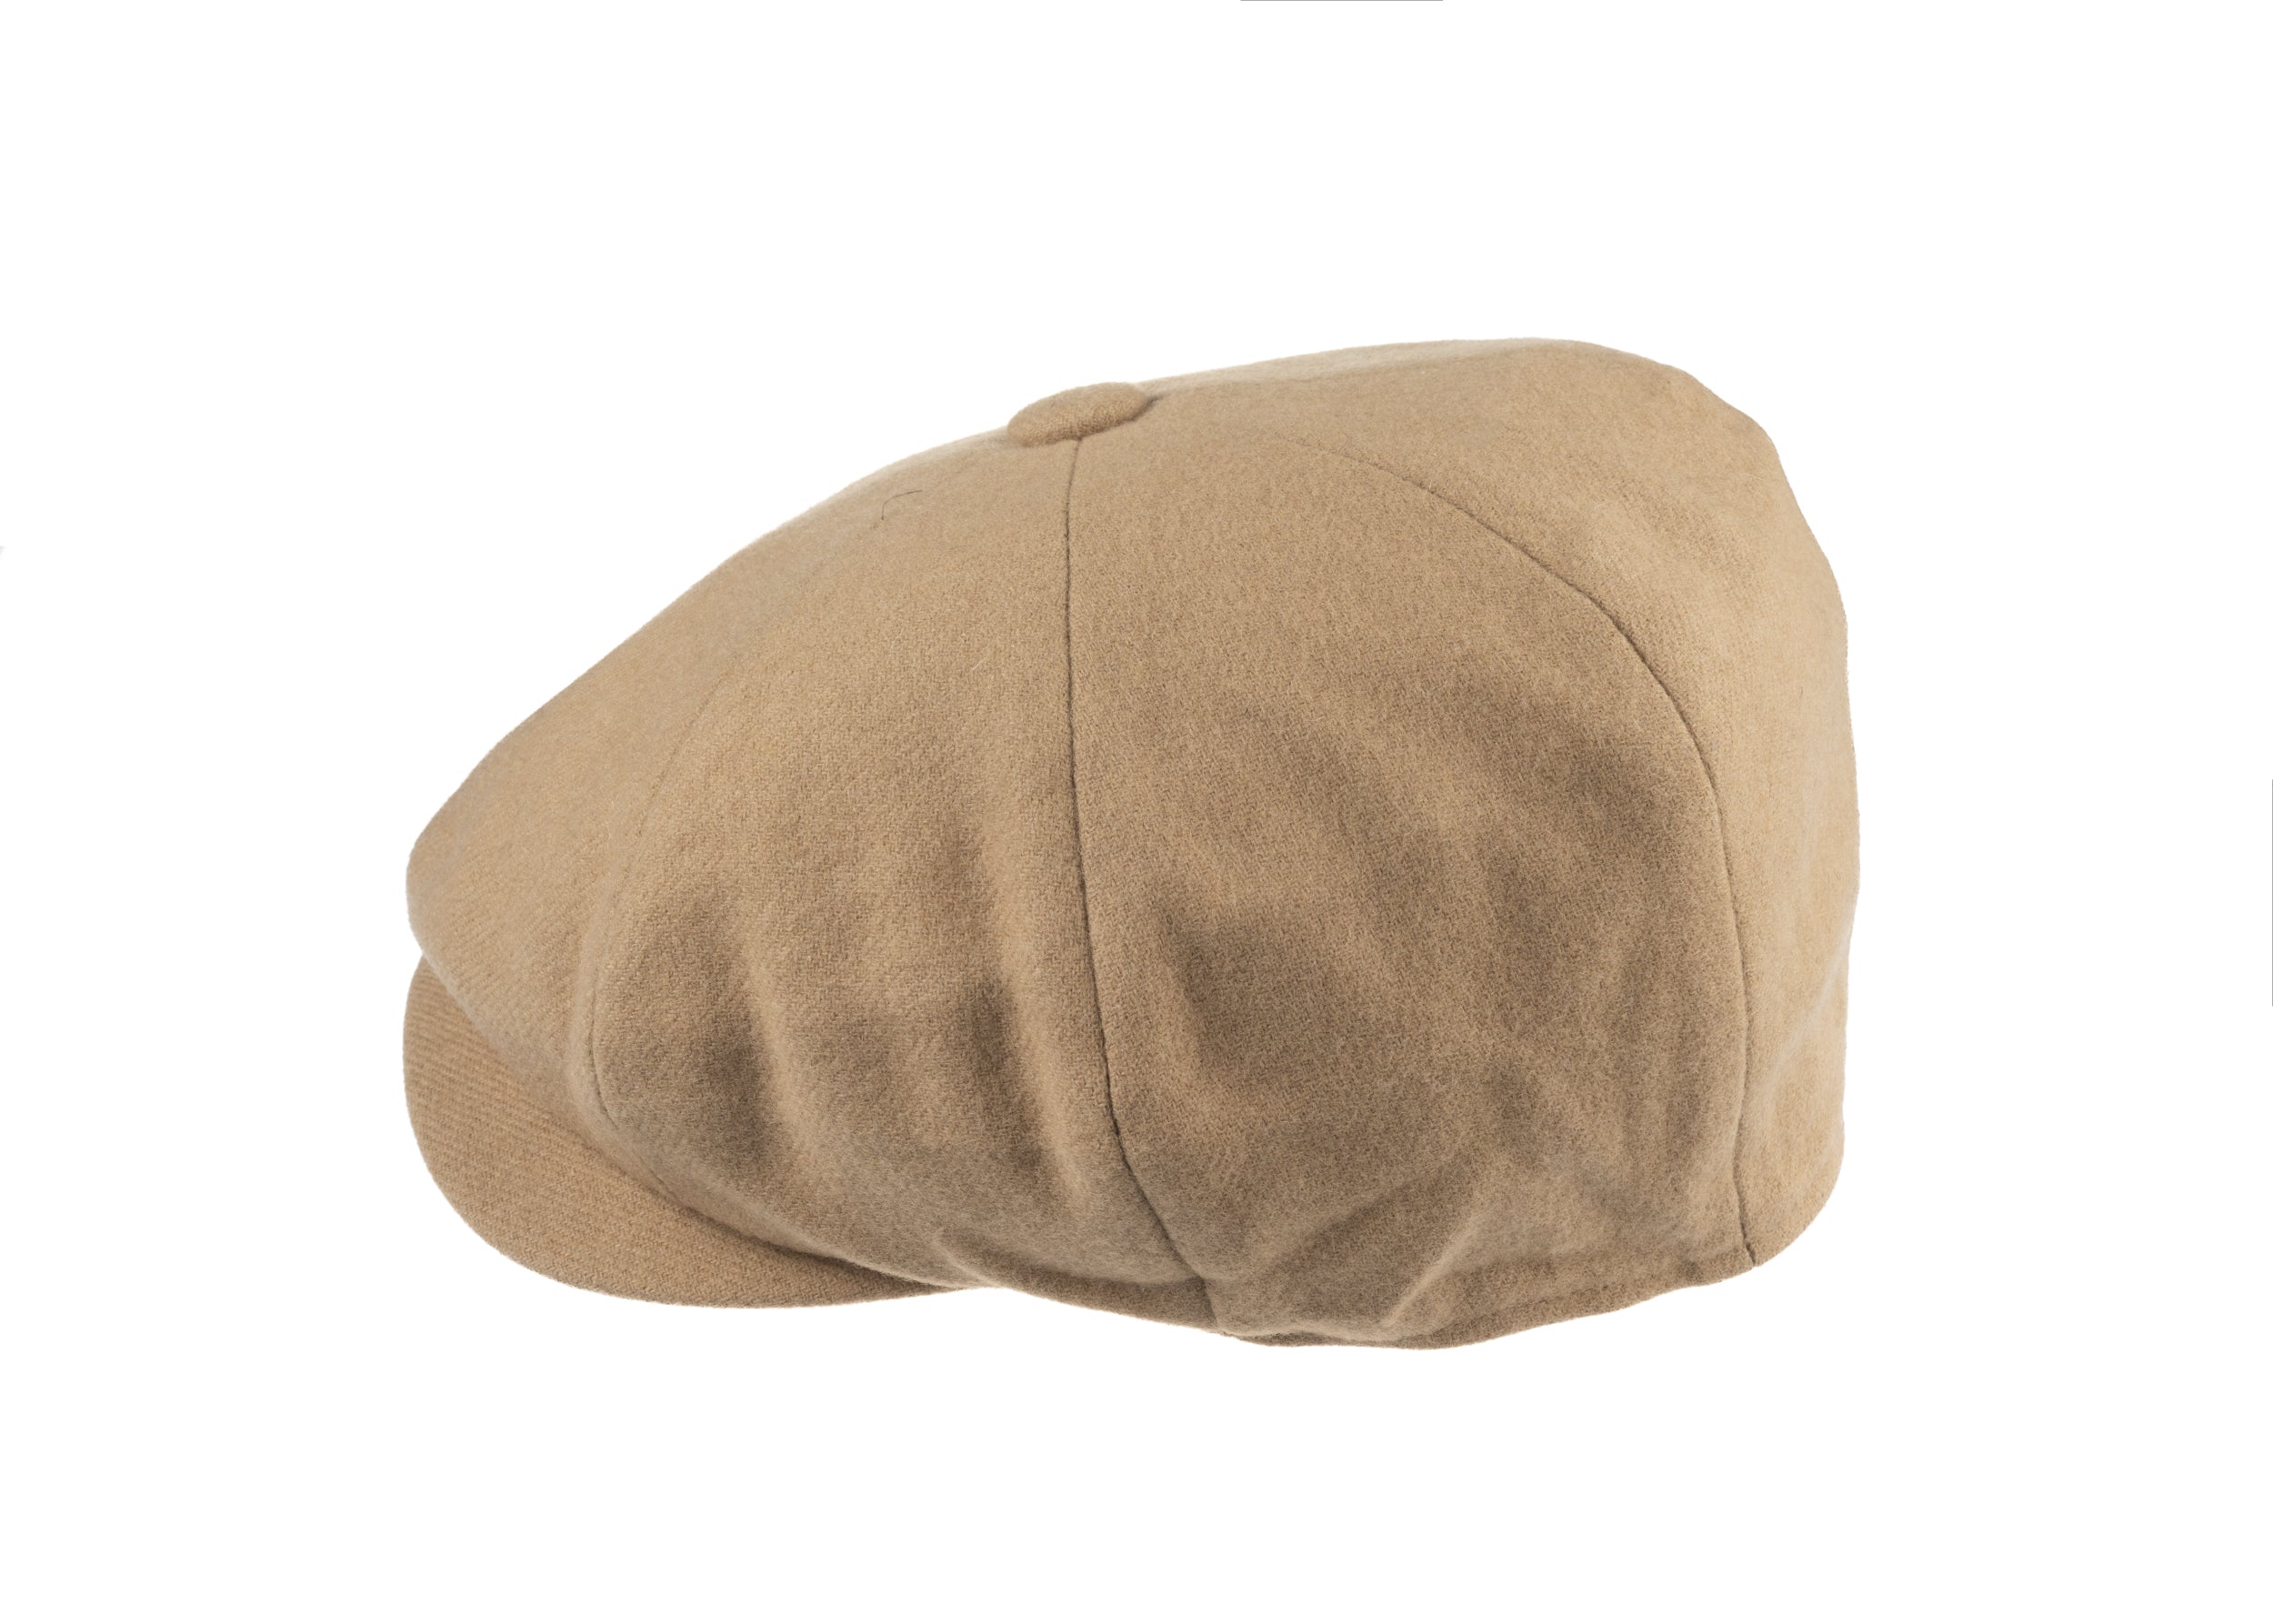 Josh 8 piece baker boy cap in cashmere/wool blend fabric in Camel